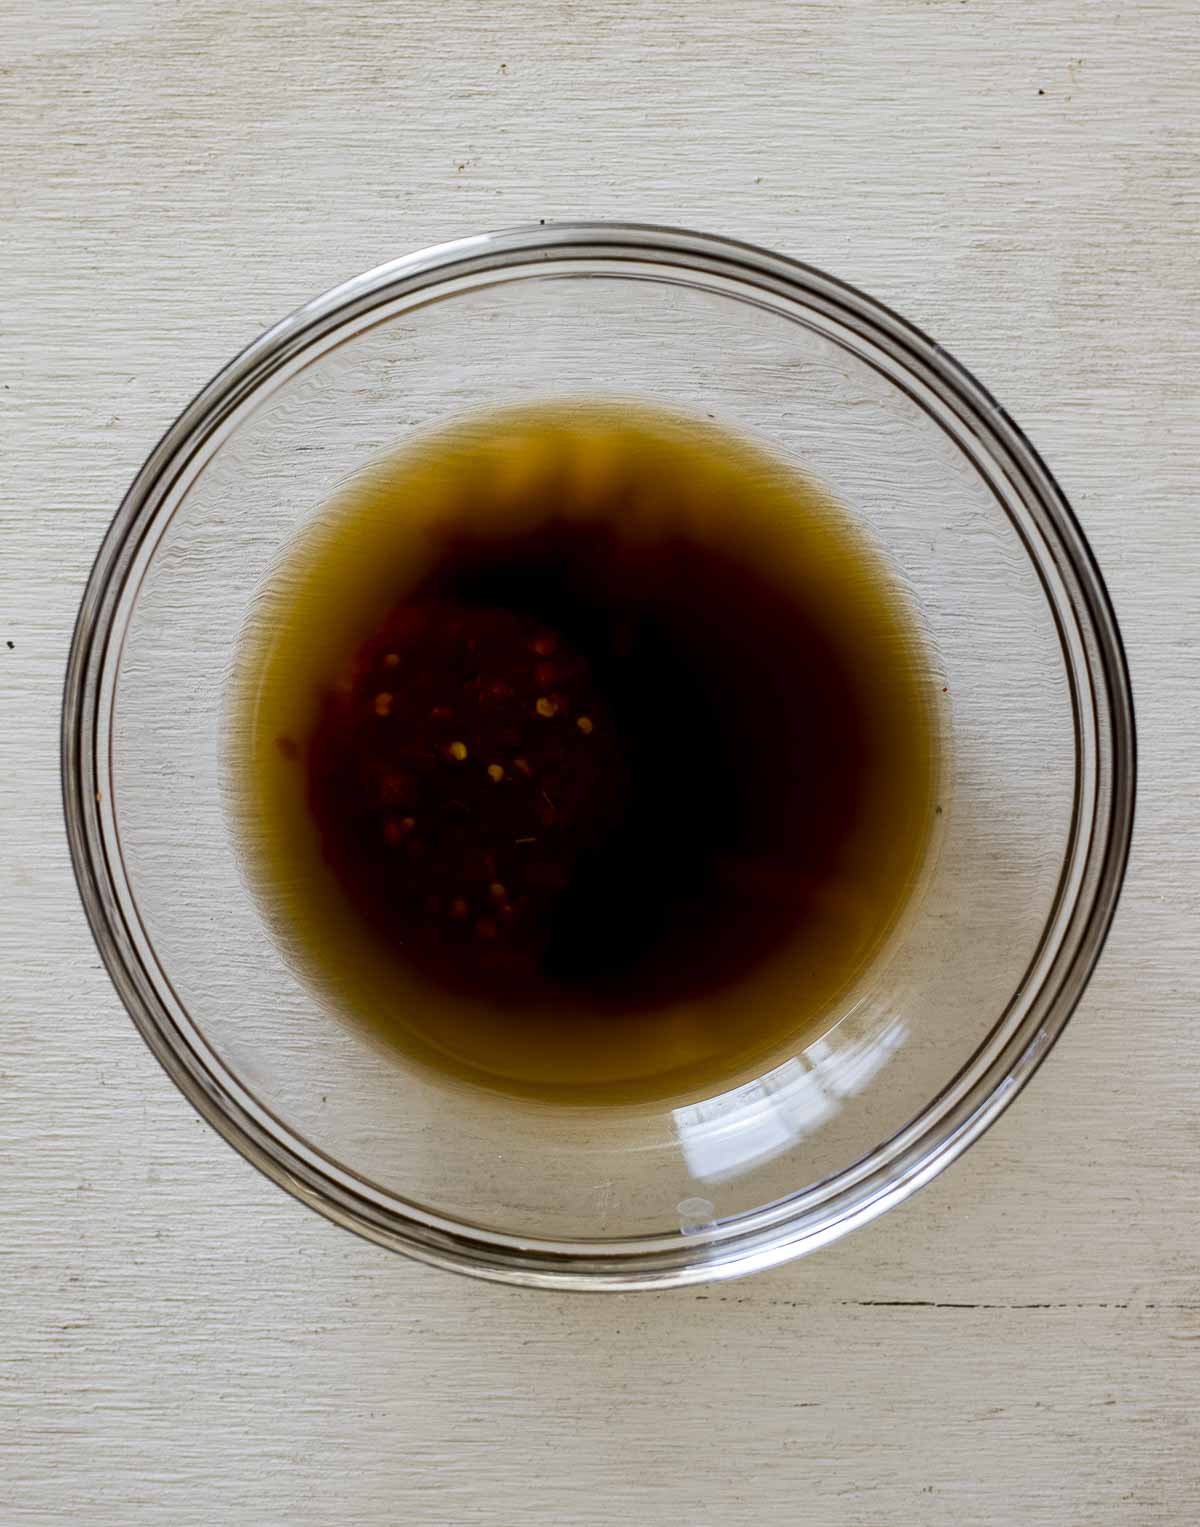 a glass bowl of brown liquid